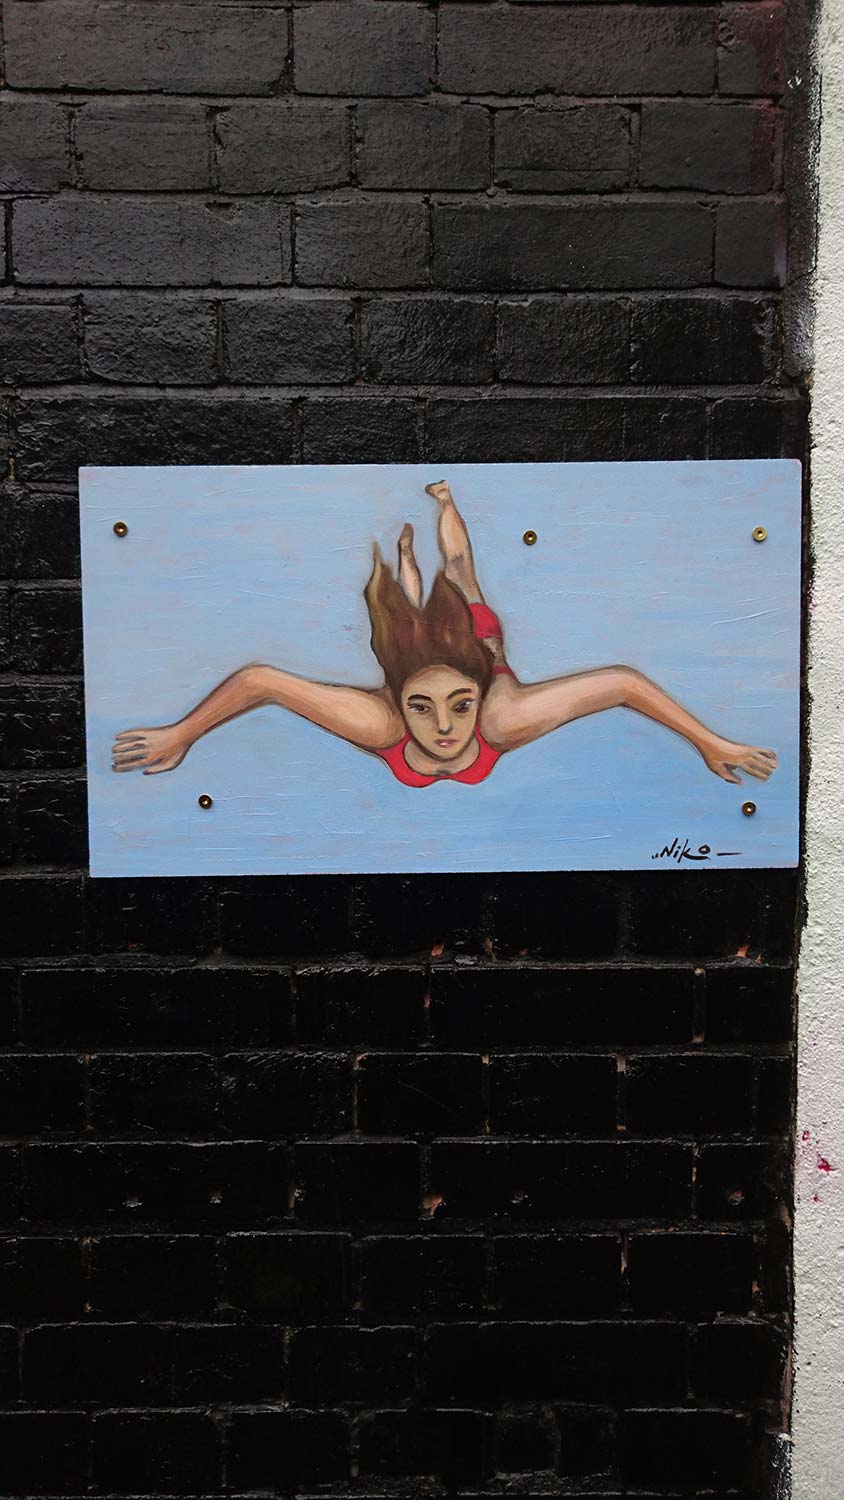 Niko Streetart: "Swimming / Flying" at BaconStreet - salzig berlin galerie